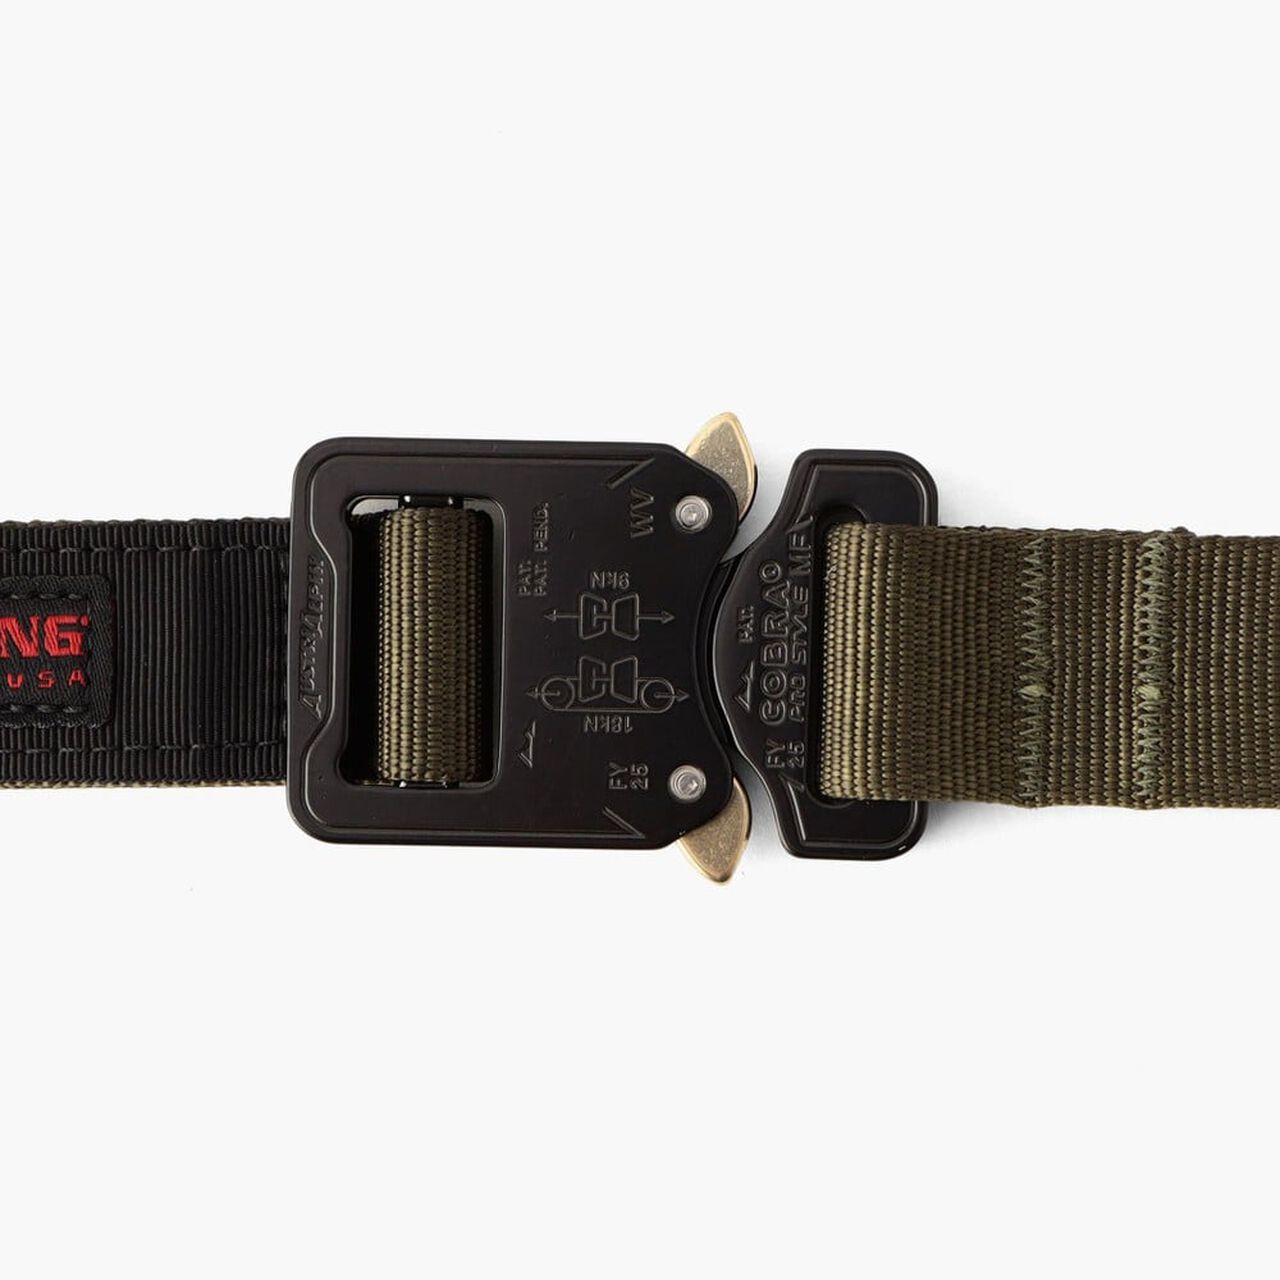 Belt Buckles: Why You Need a Belt With a Cobra® Buckle – Klik Belts